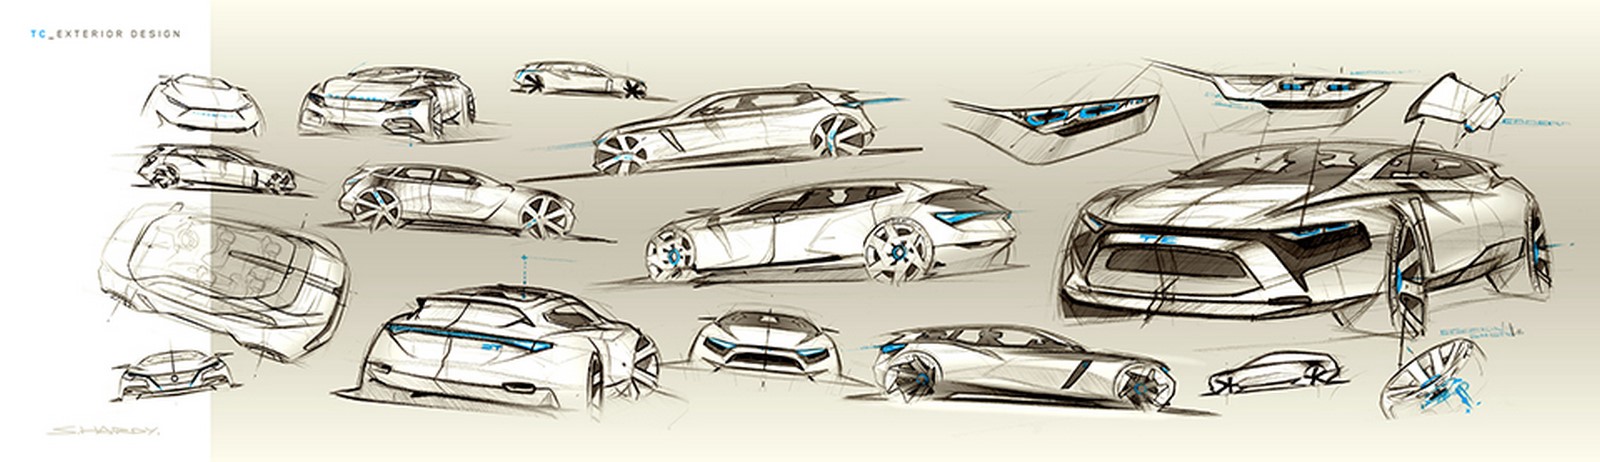 Future trends in Automotive Design- Cars - Sheet2